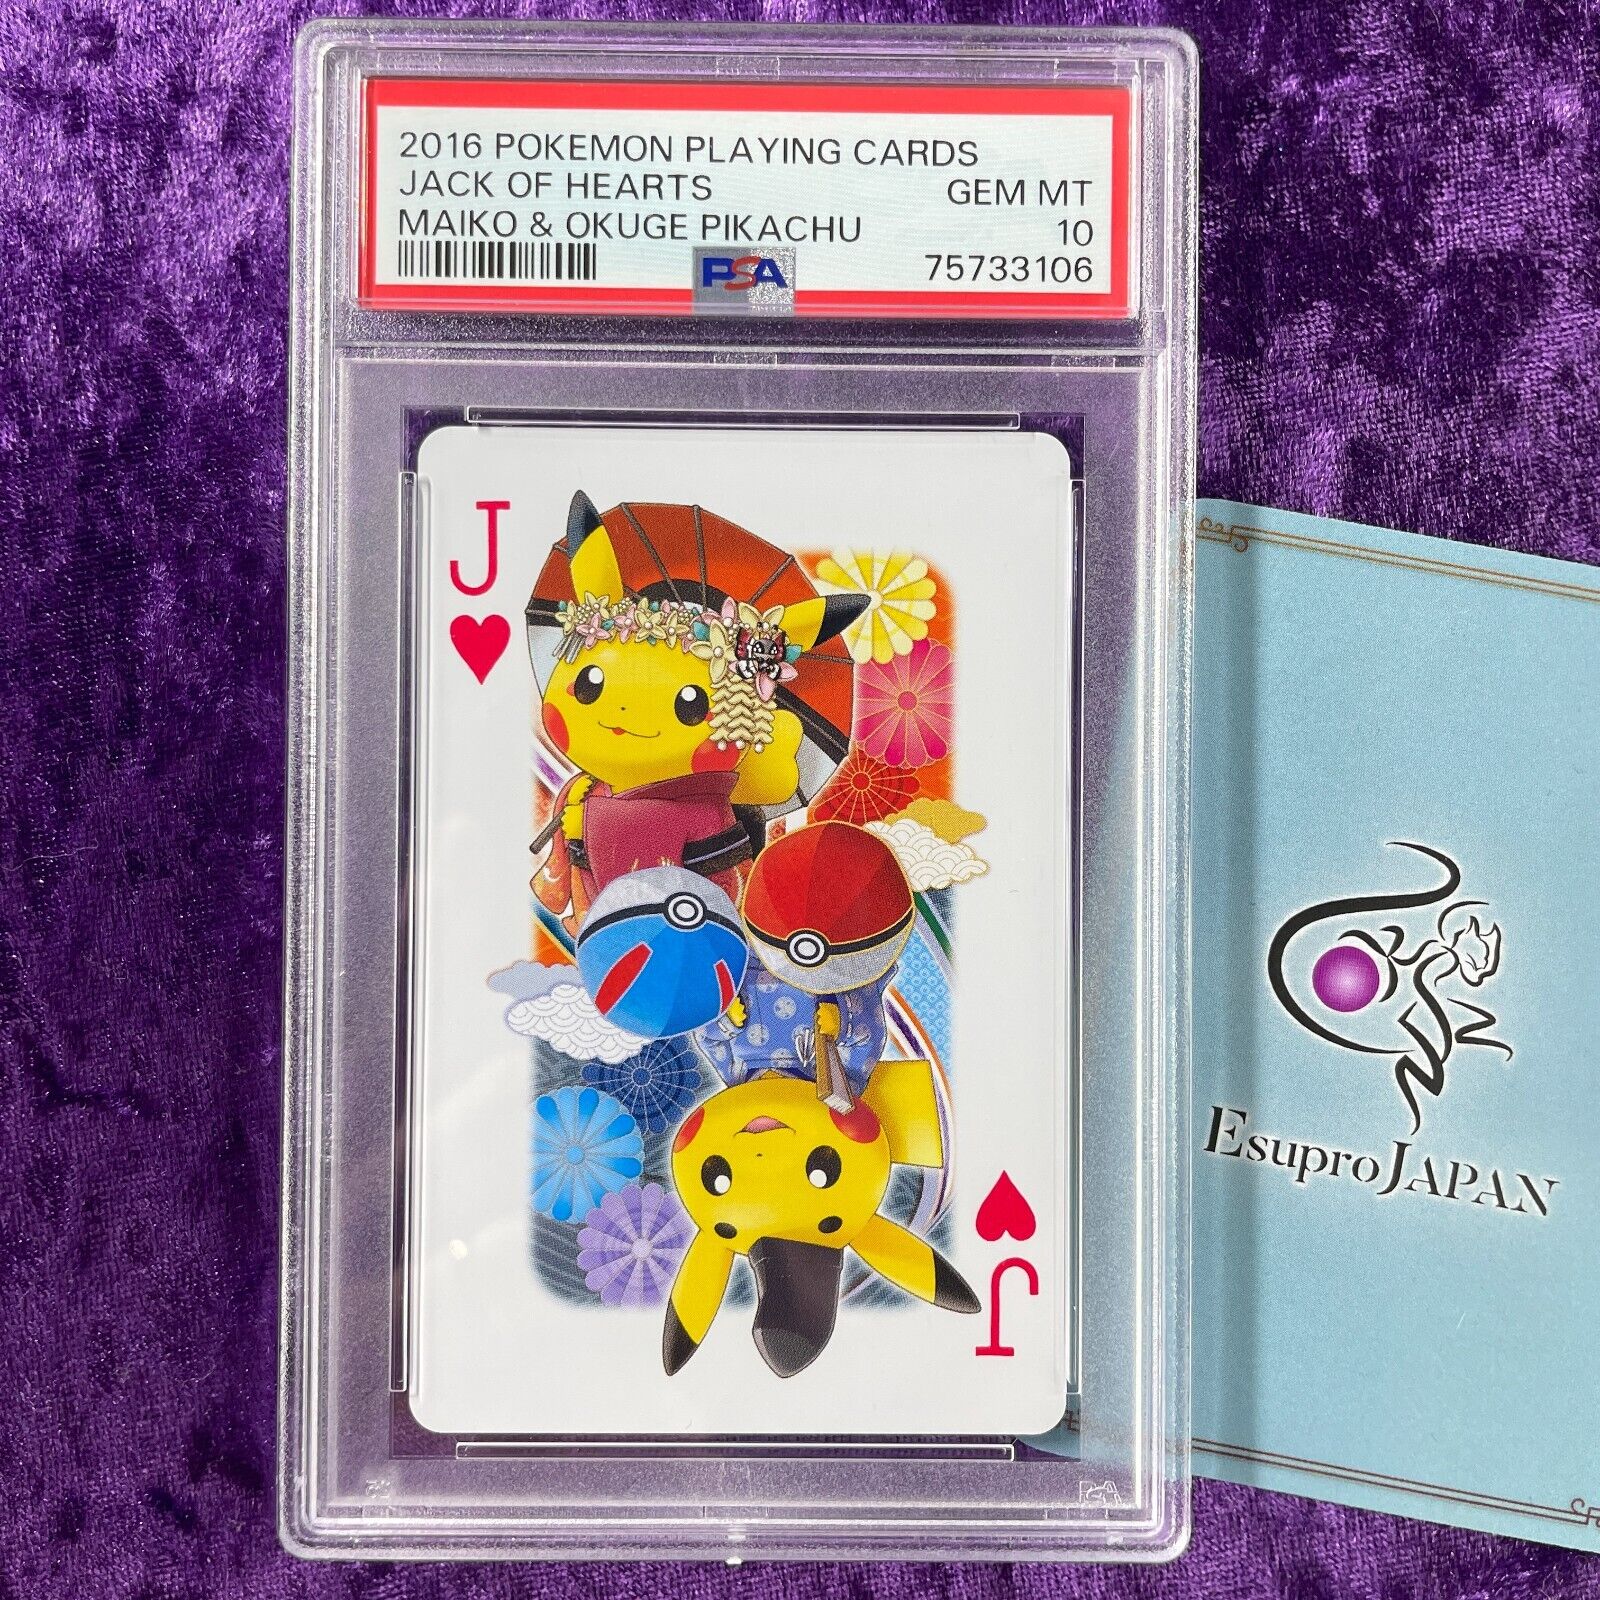 PSA 10 2016 Pokemon Playing Cards Maiko Pikachu & Okuge Pikachu Jack of Hearts